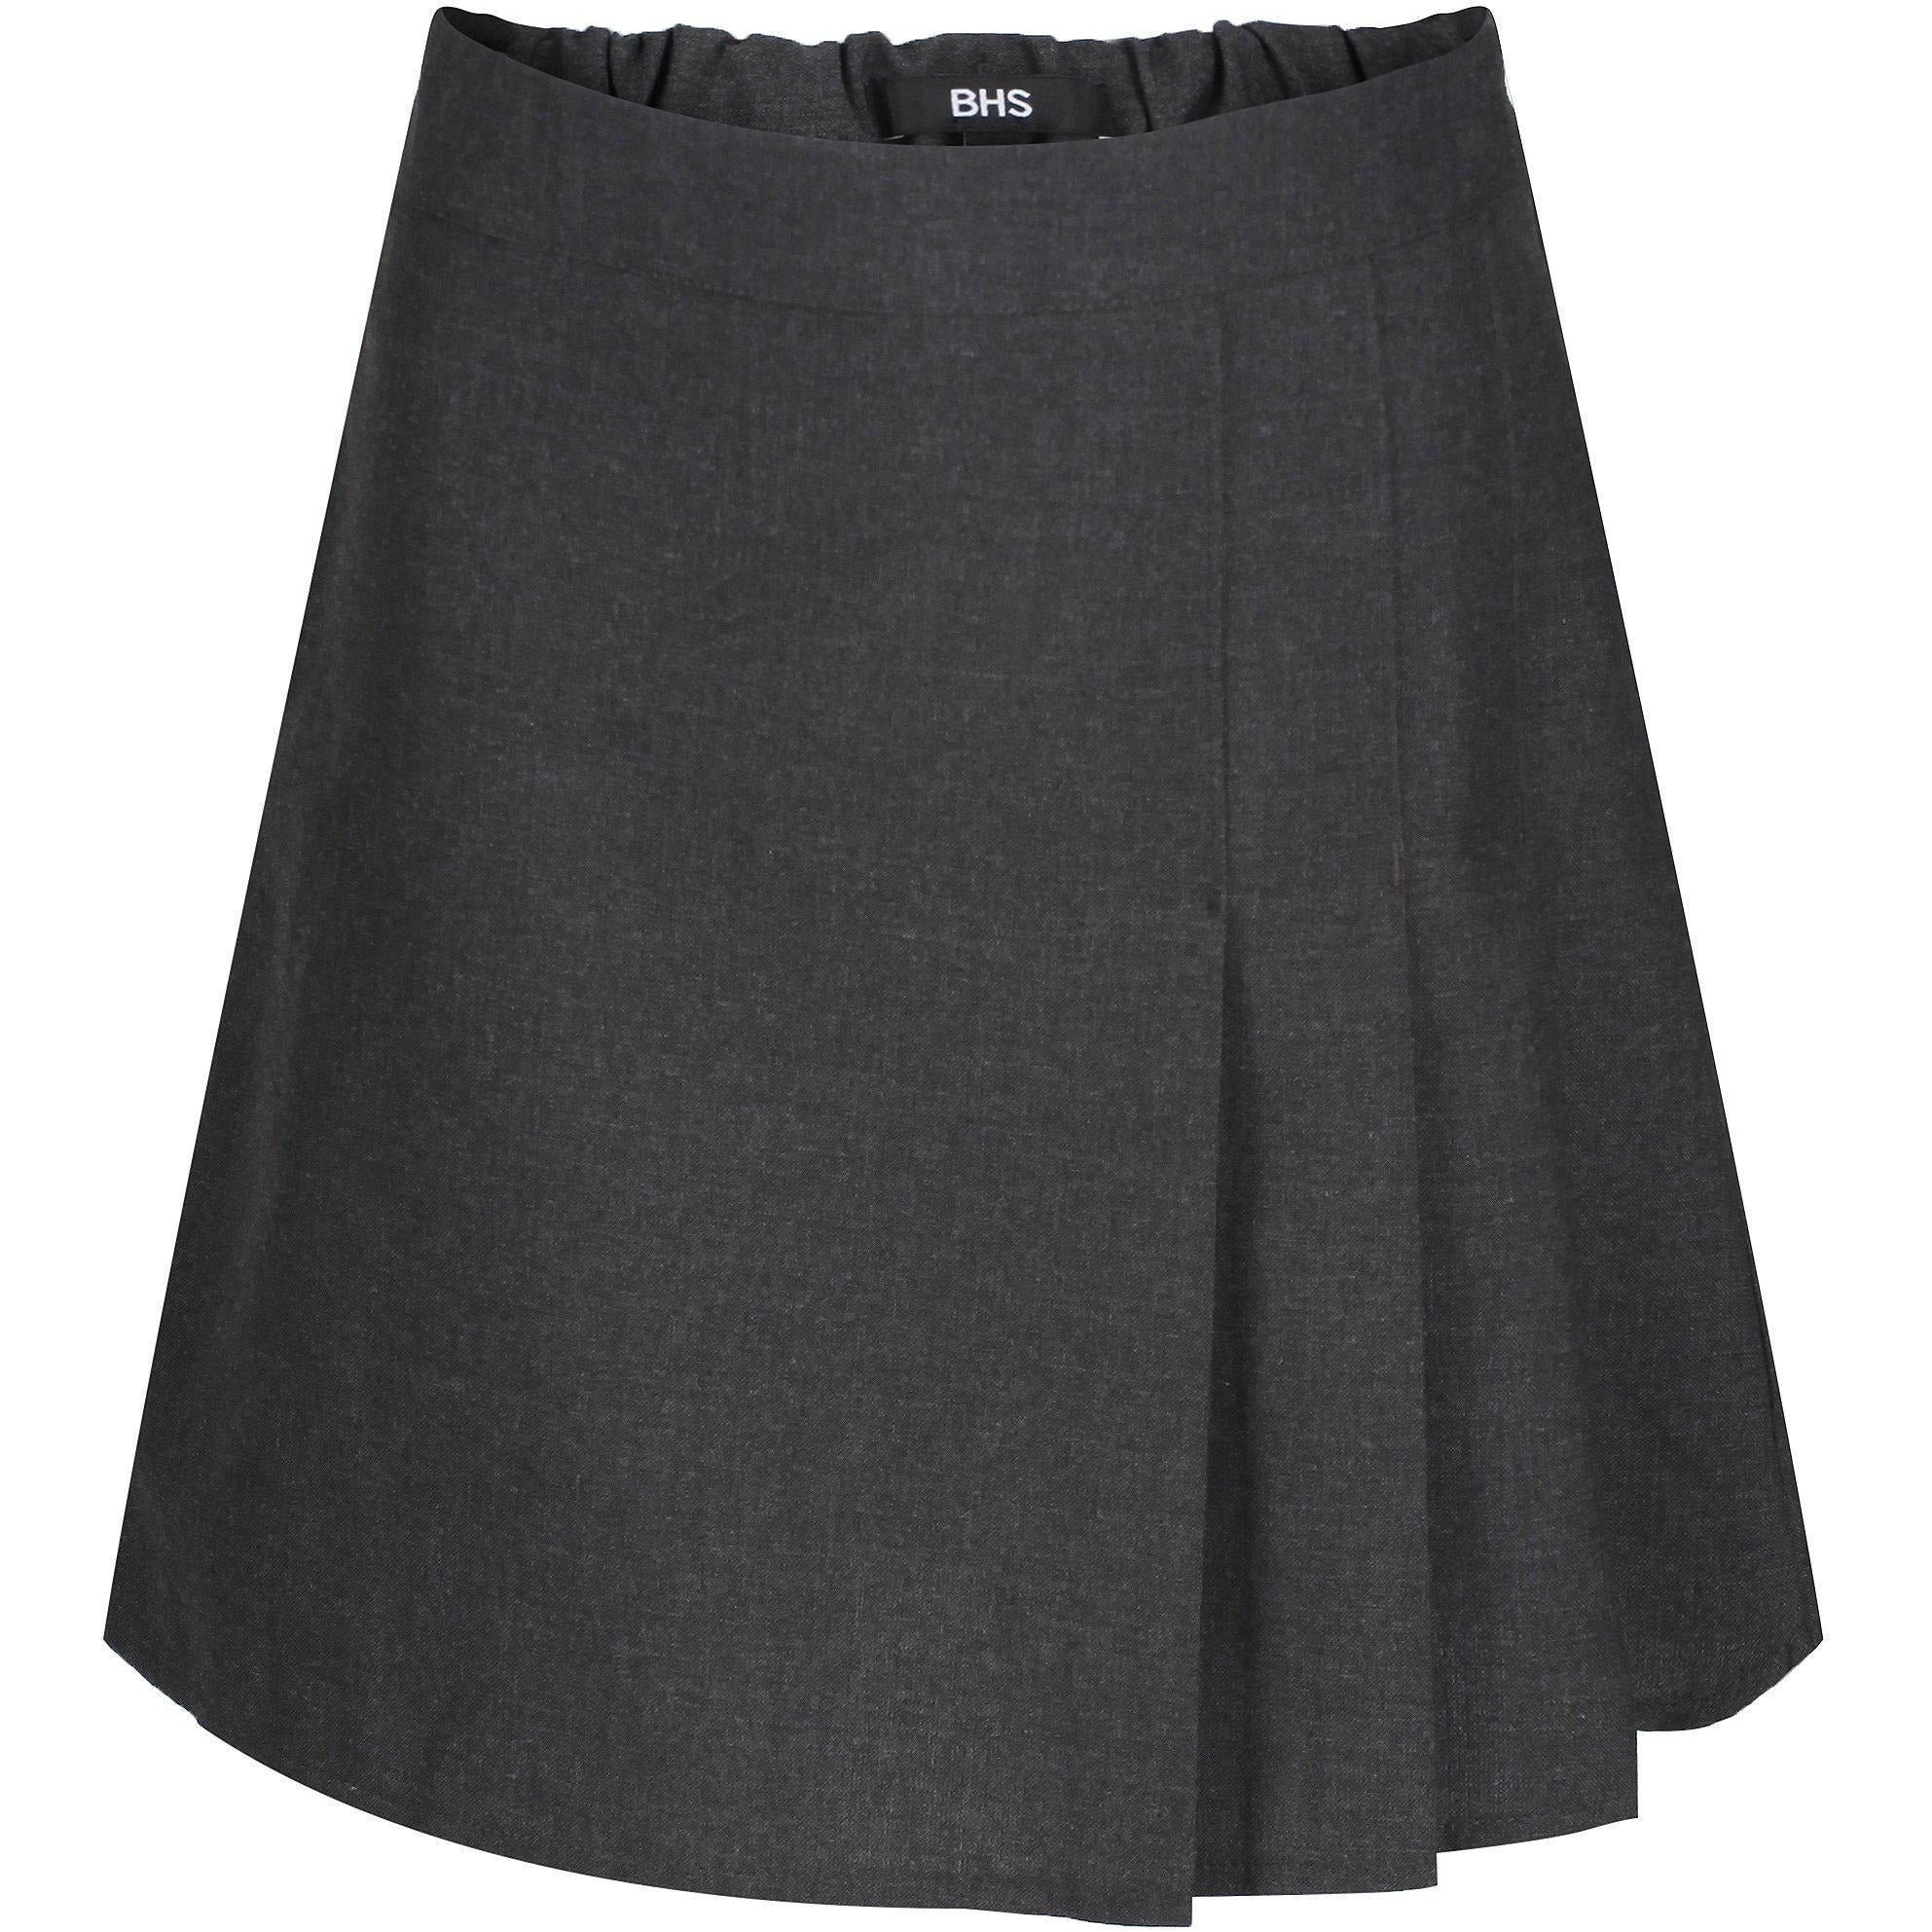 Ages 4-13 Girls School Skirt Adjustable Waist Black Grey Pleated ...